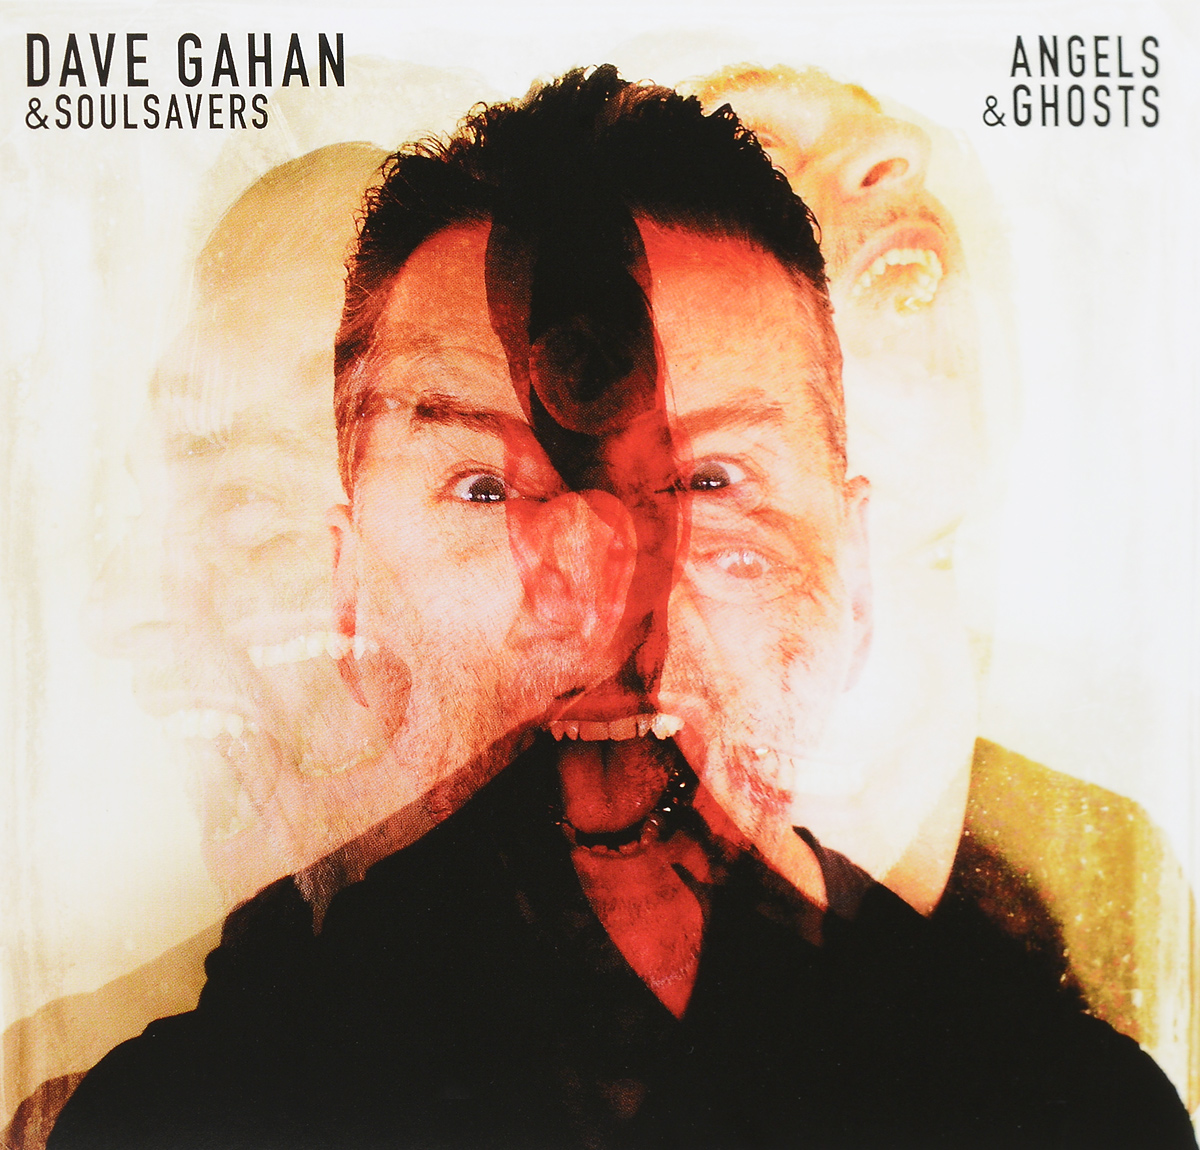 Dave Gahan & Soulsavers. Angels & Ghosts